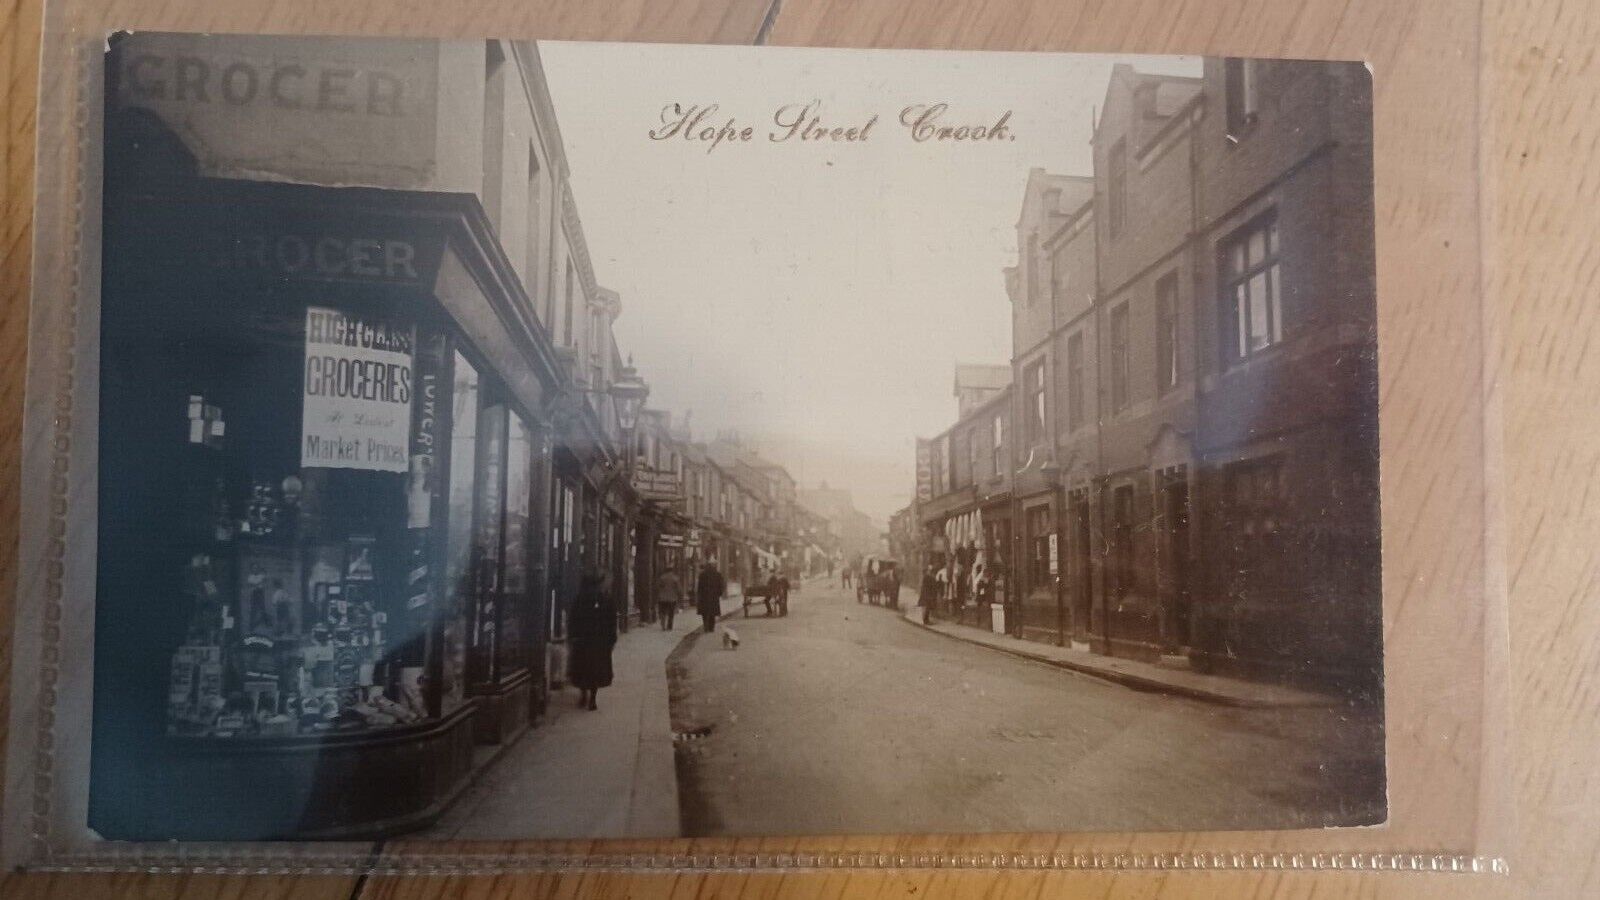 House Clearance - Vintage Service Hope Street Crook, Durham